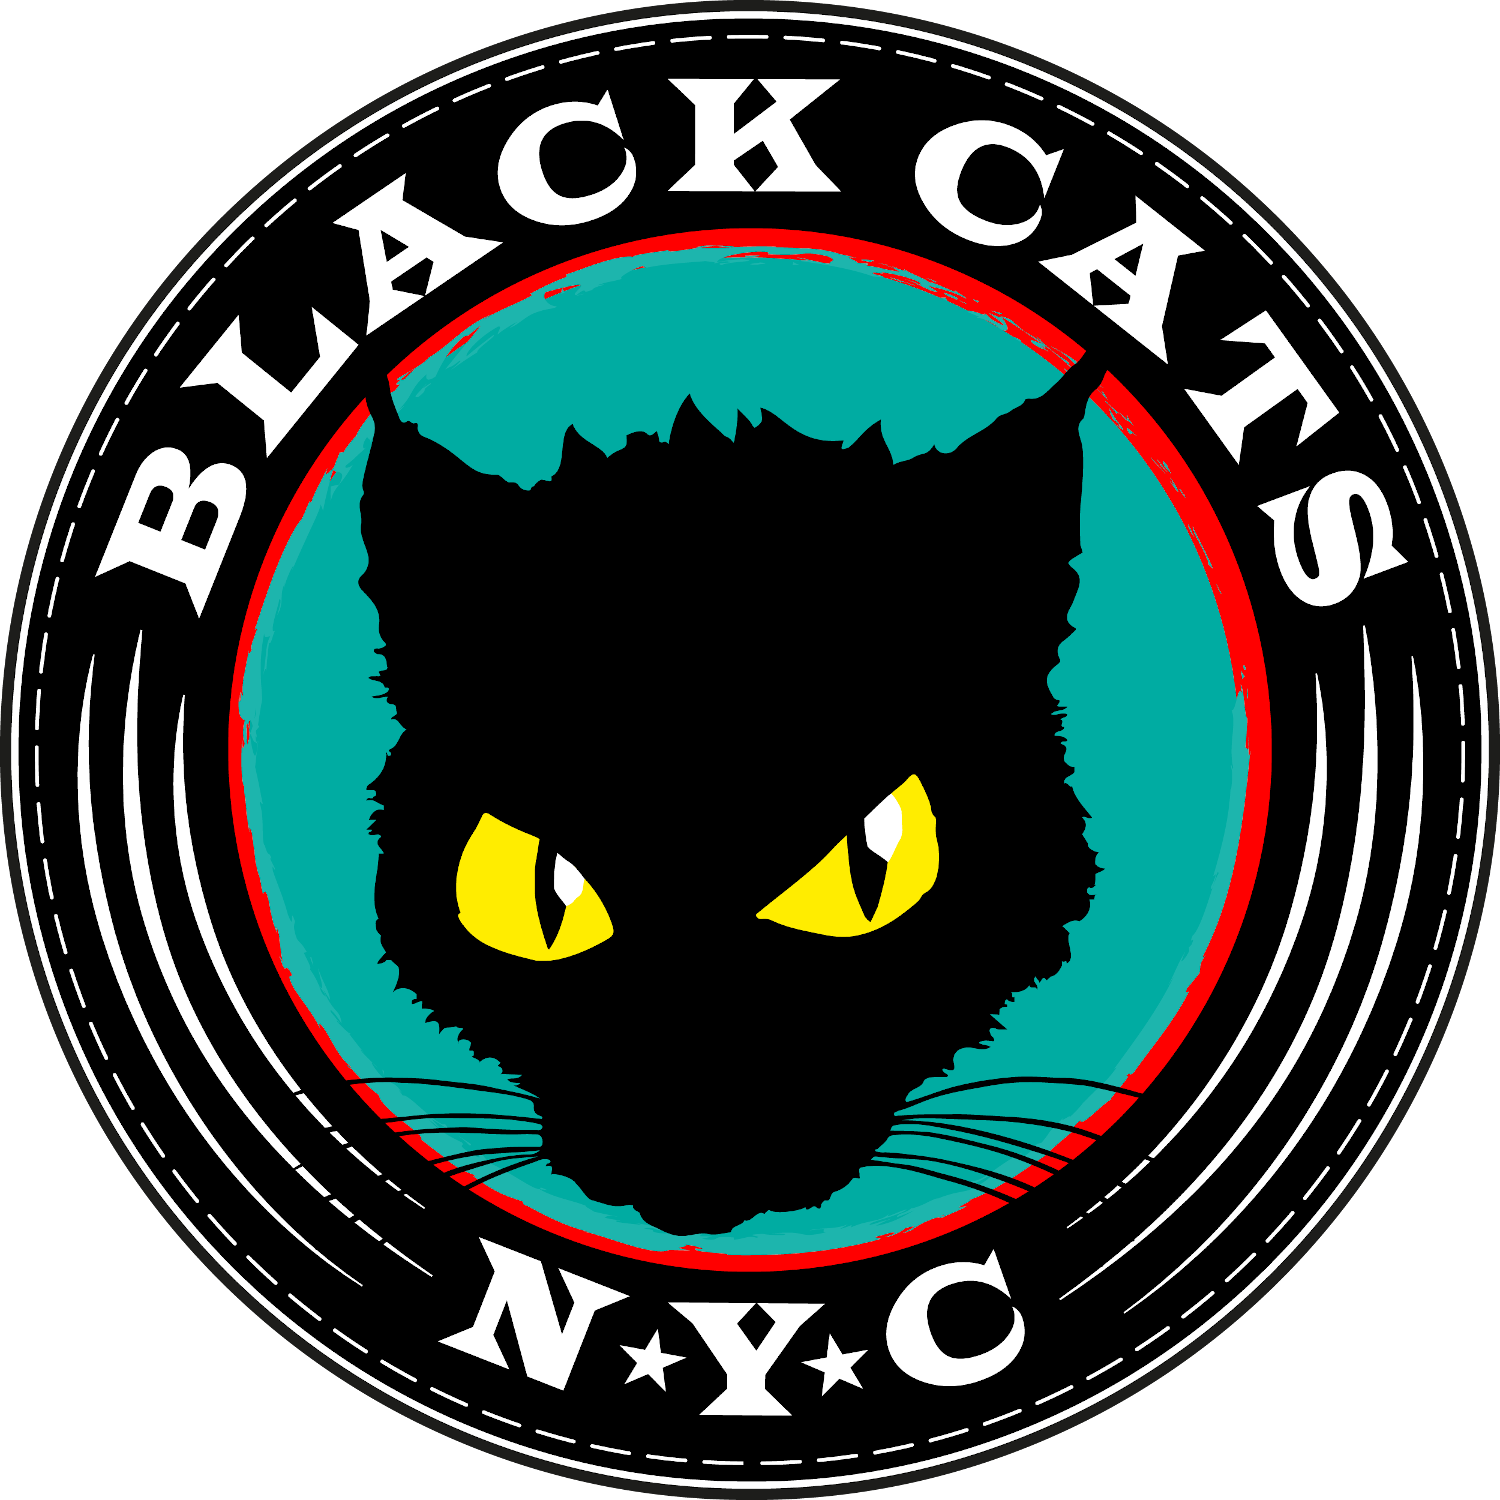 BLACK CATS NYC